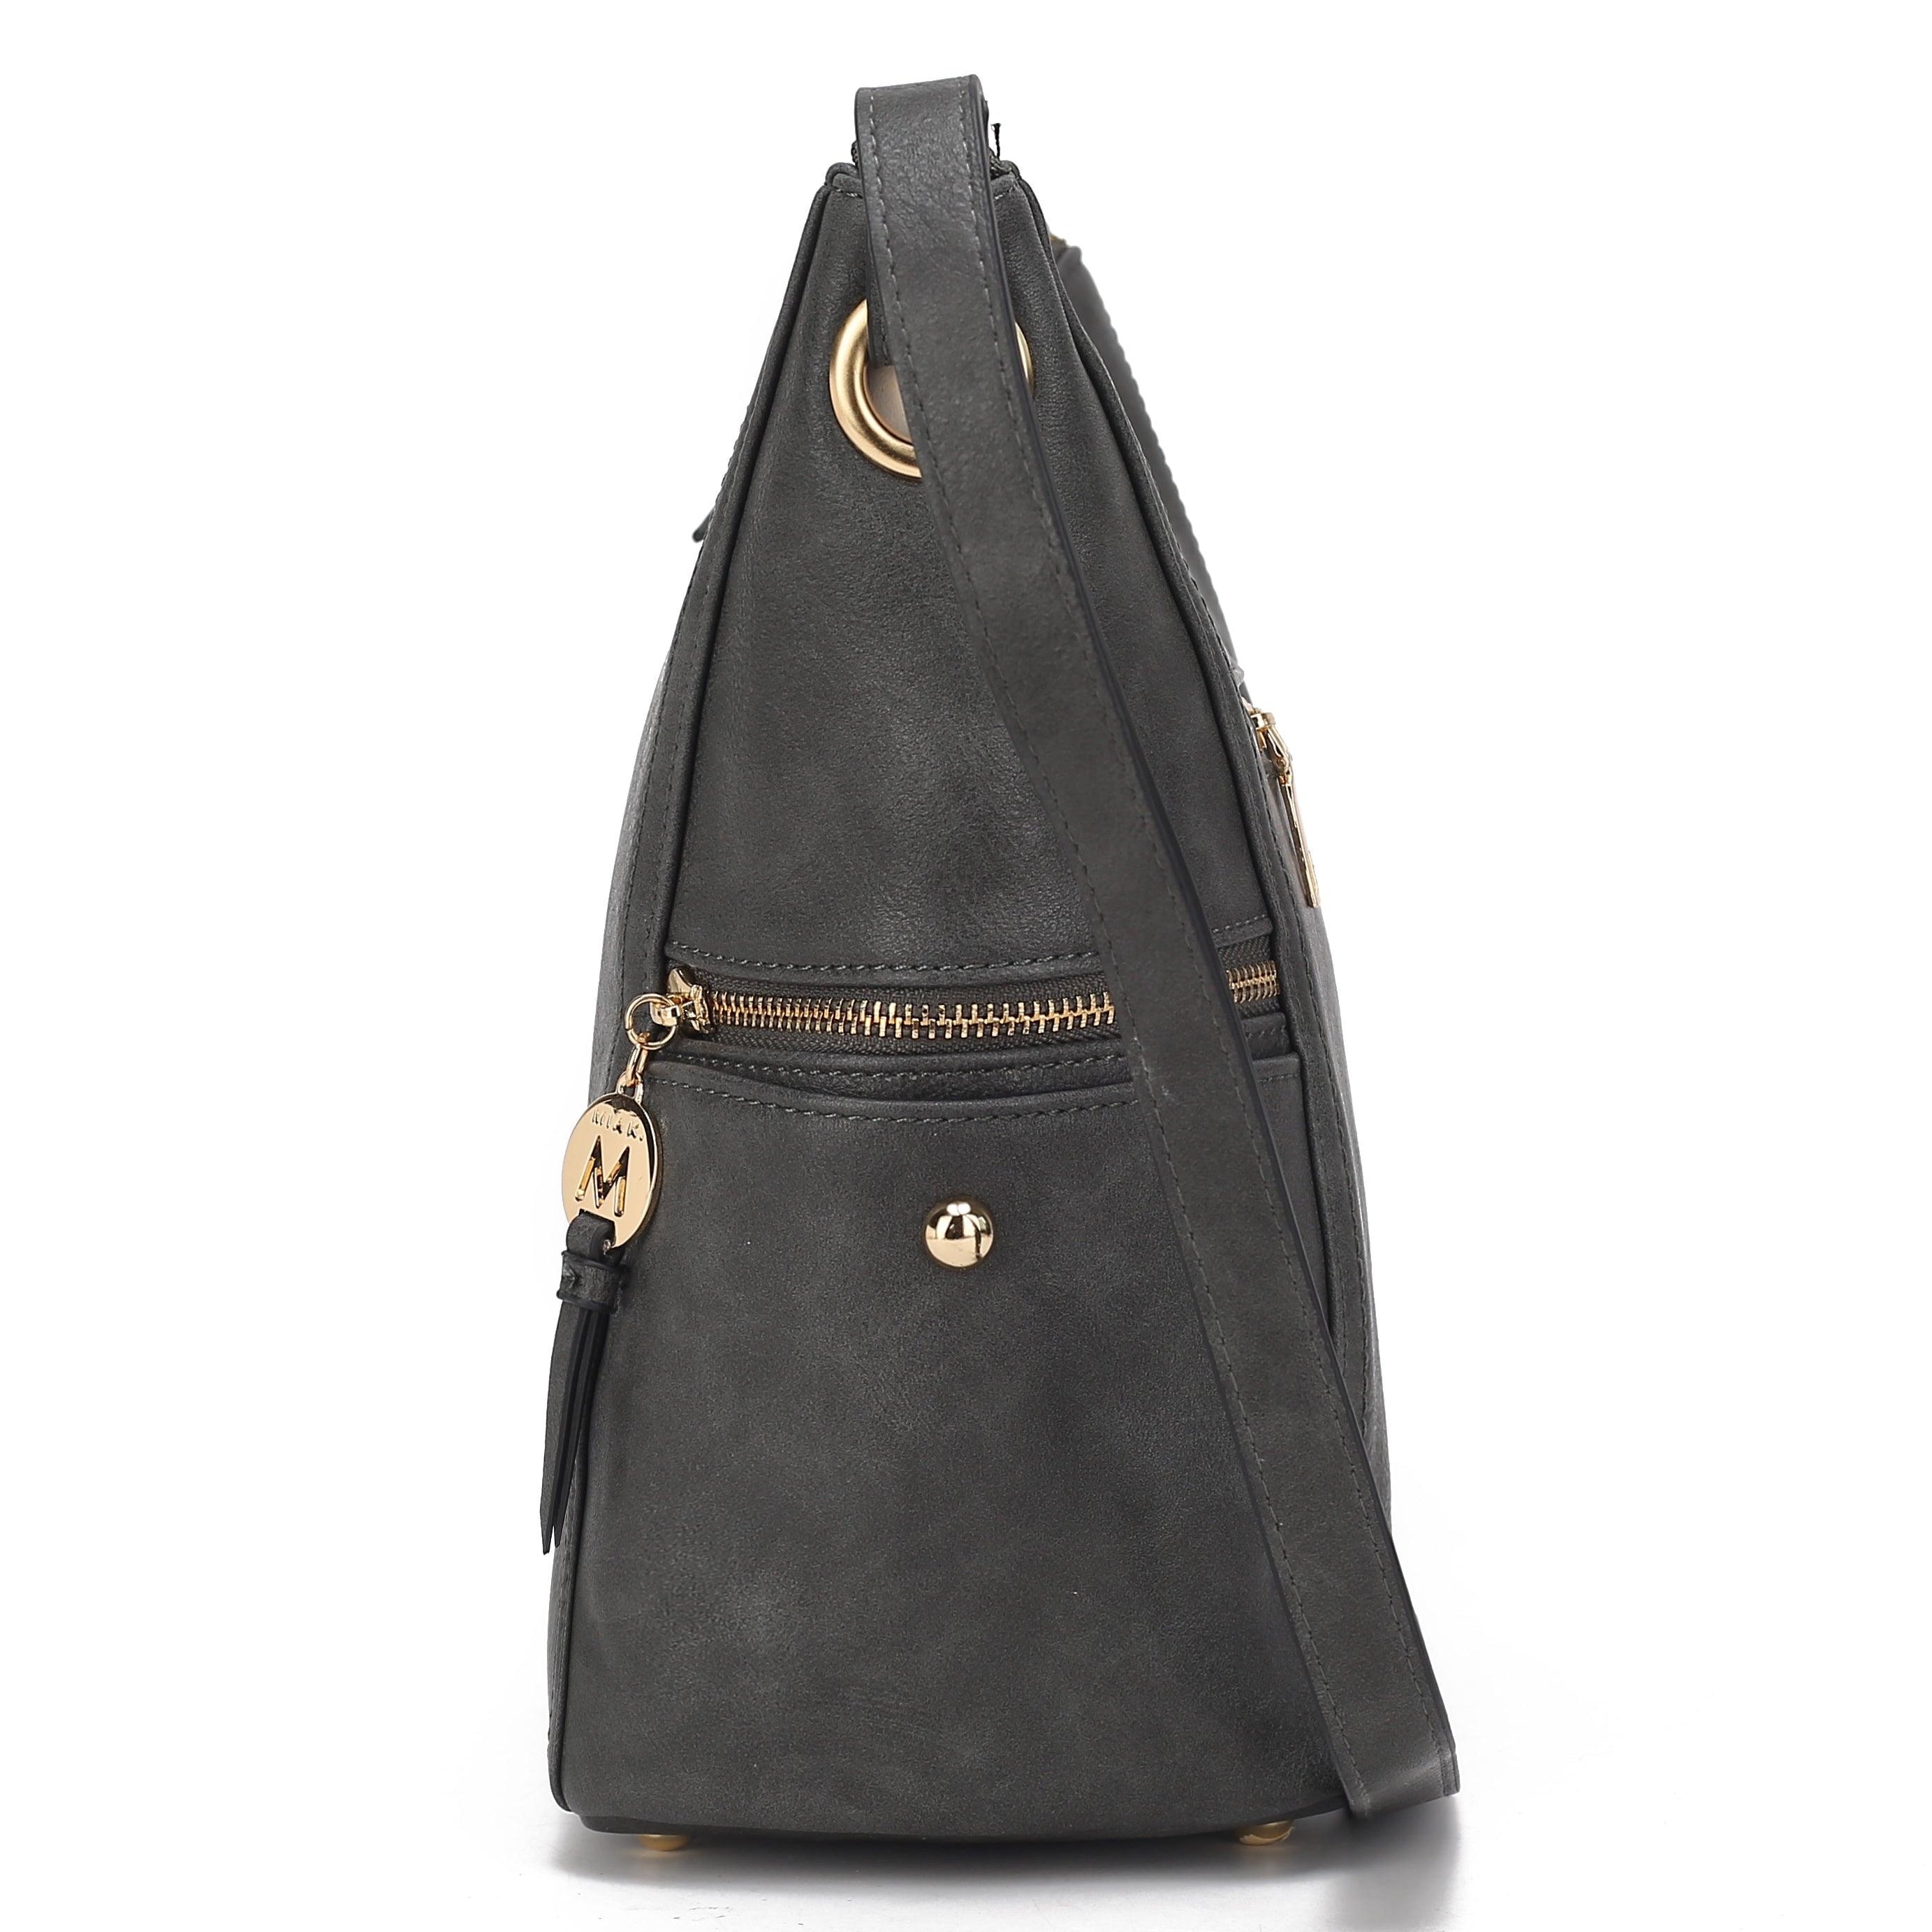 Wallets, Handbags & Accessories Lux Hobo Bag with Wallet Handbag Vegan Leather Women